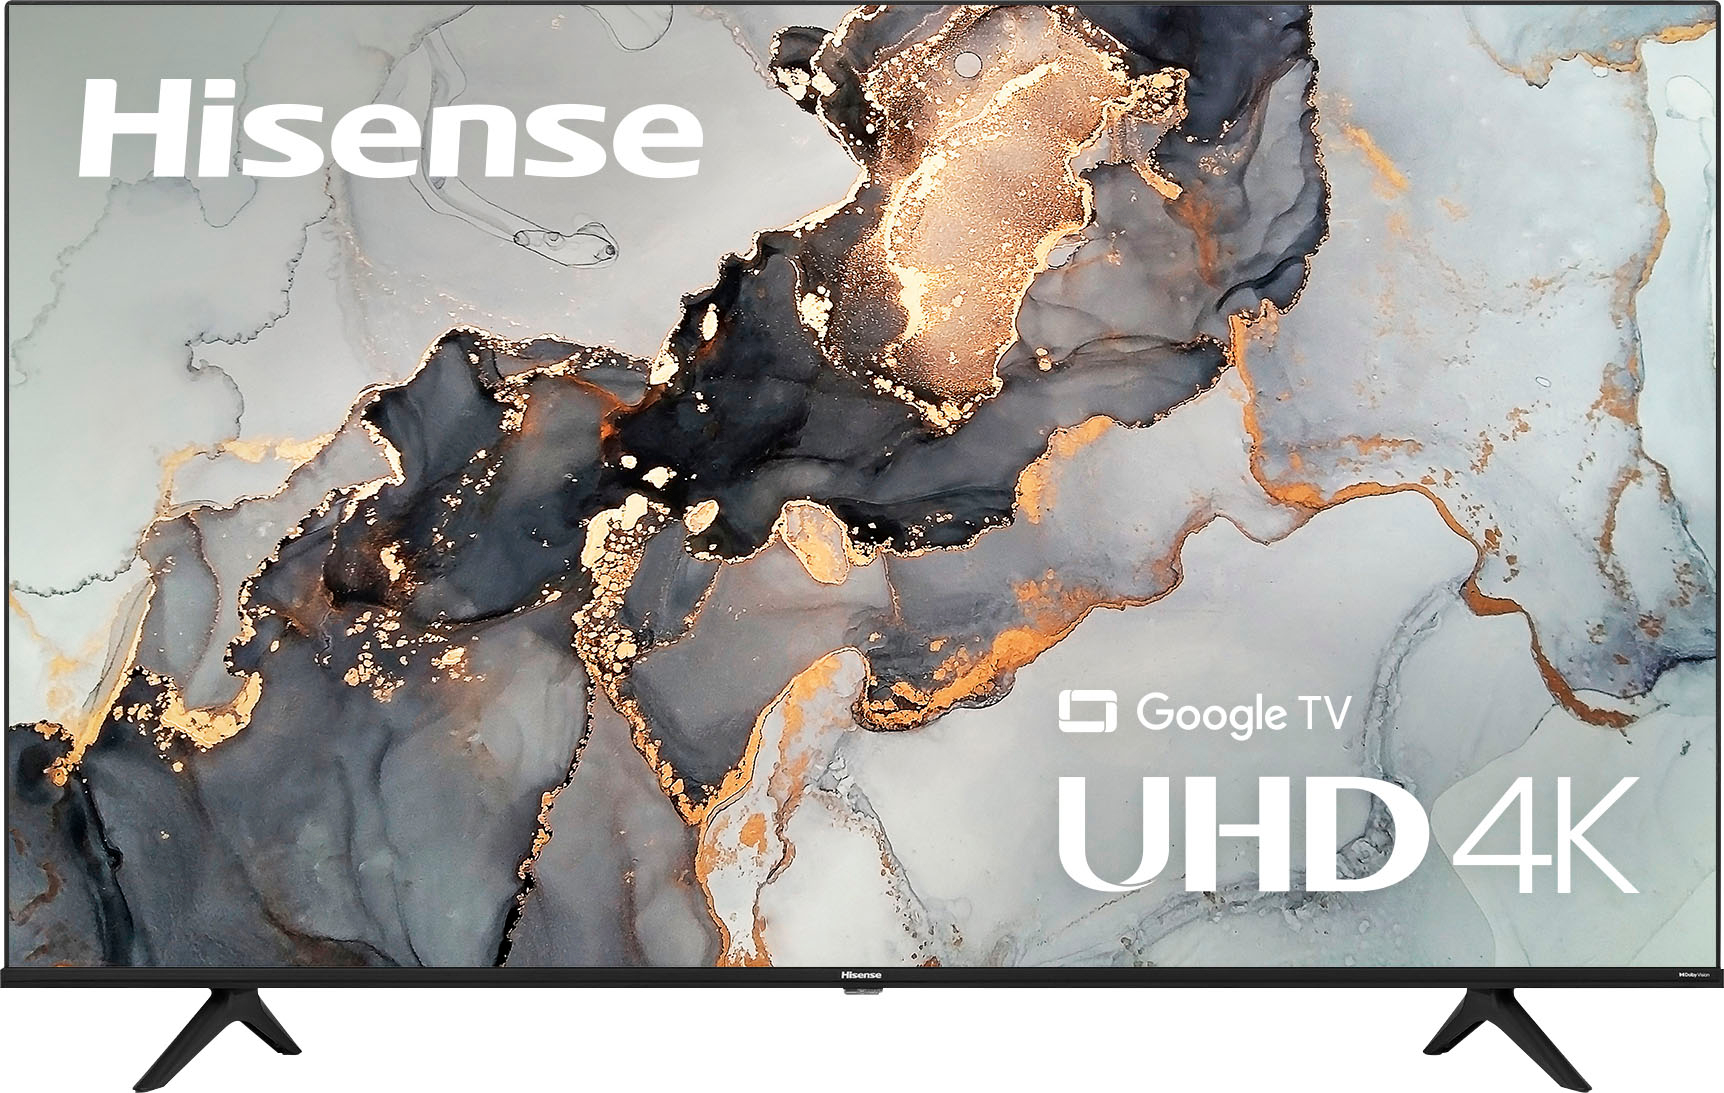 Hisense - 50" Class A6 Series LED 4K UHD Smart Google TV $239.99+FS @Best Buy